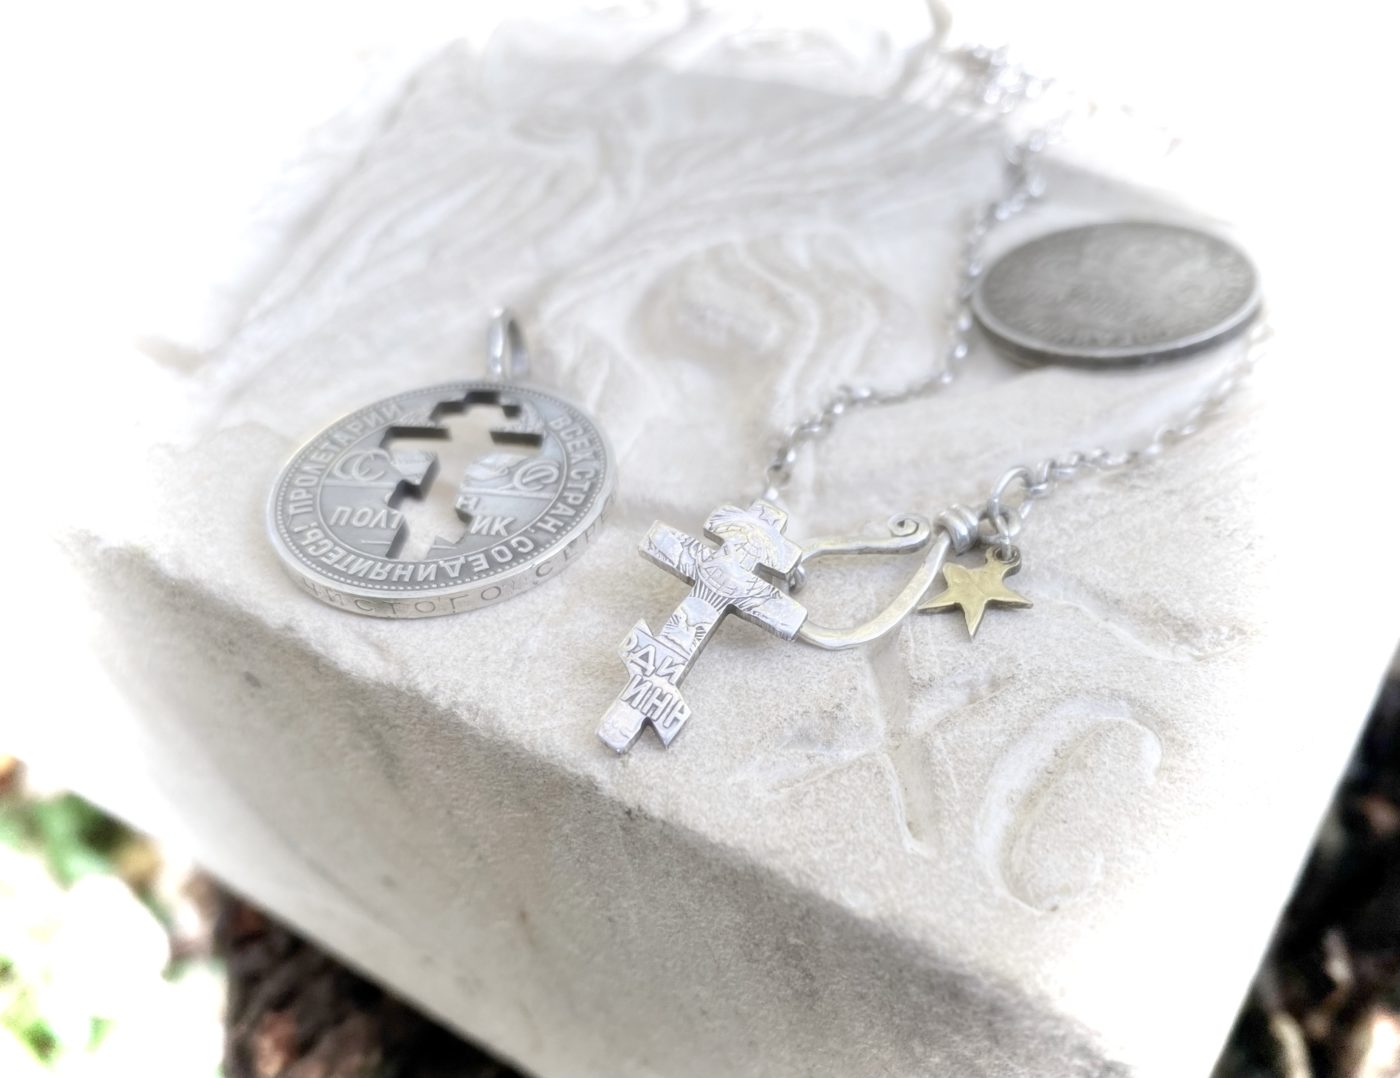 Russian Orthodox Cross necklace pendant handmade from a 50 kopek silver coin circa 1924. Вера в Бога icxc NIKA